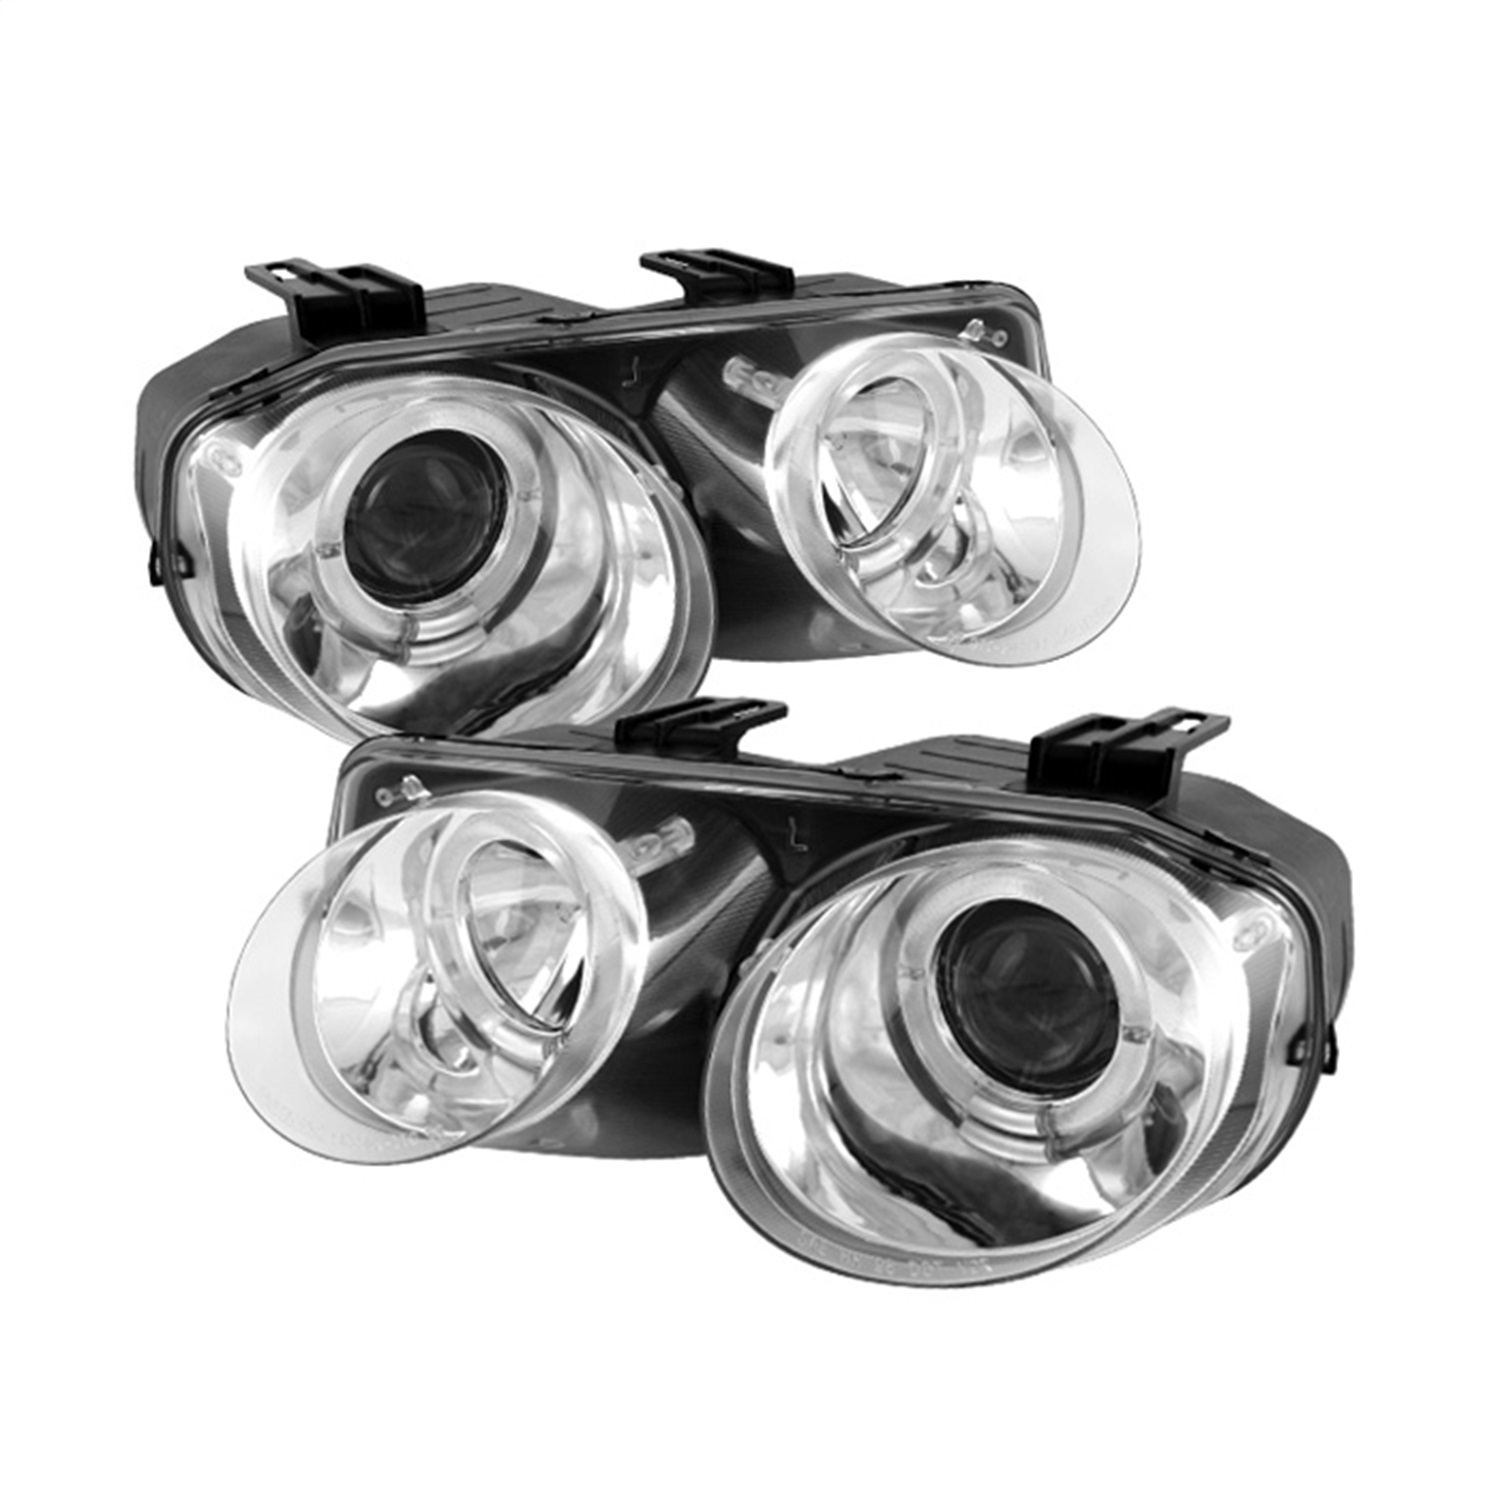 Spyder Auto 5008701 Halo Projector Headlights Fits 98-01 Integra